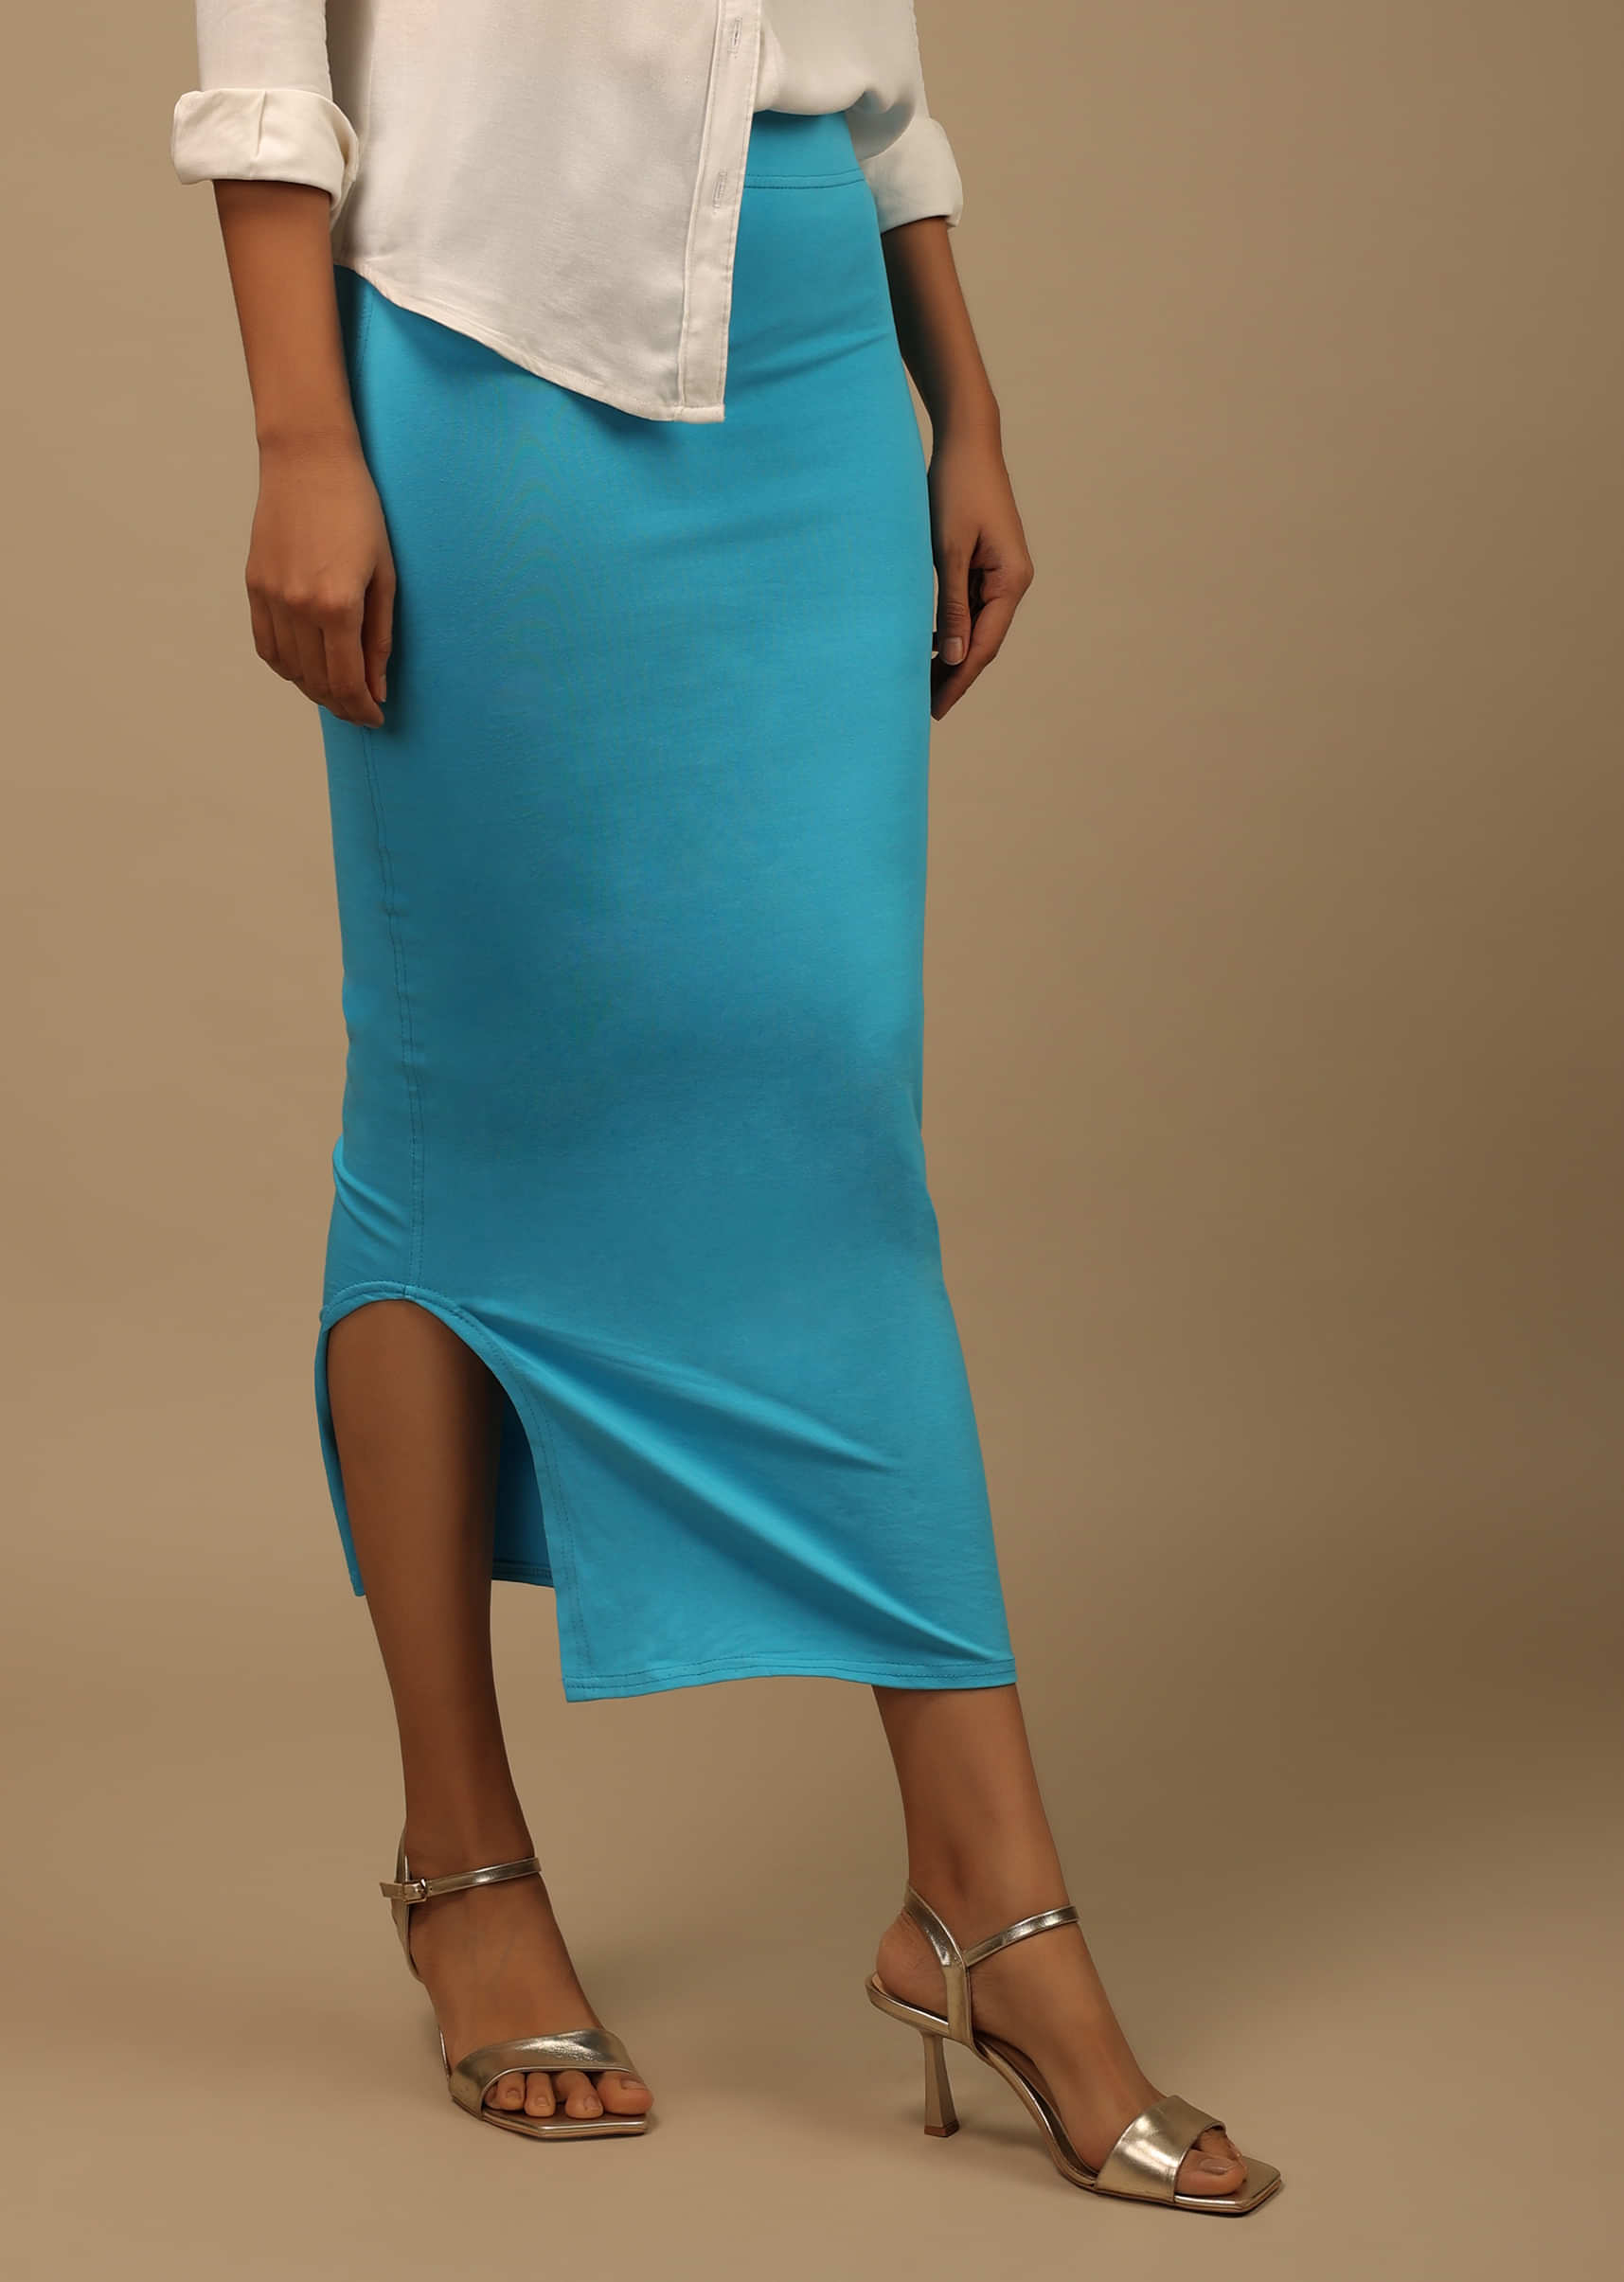 Saree Shapewear Petticoats - Buy Saree Shapewear Petticoats Online